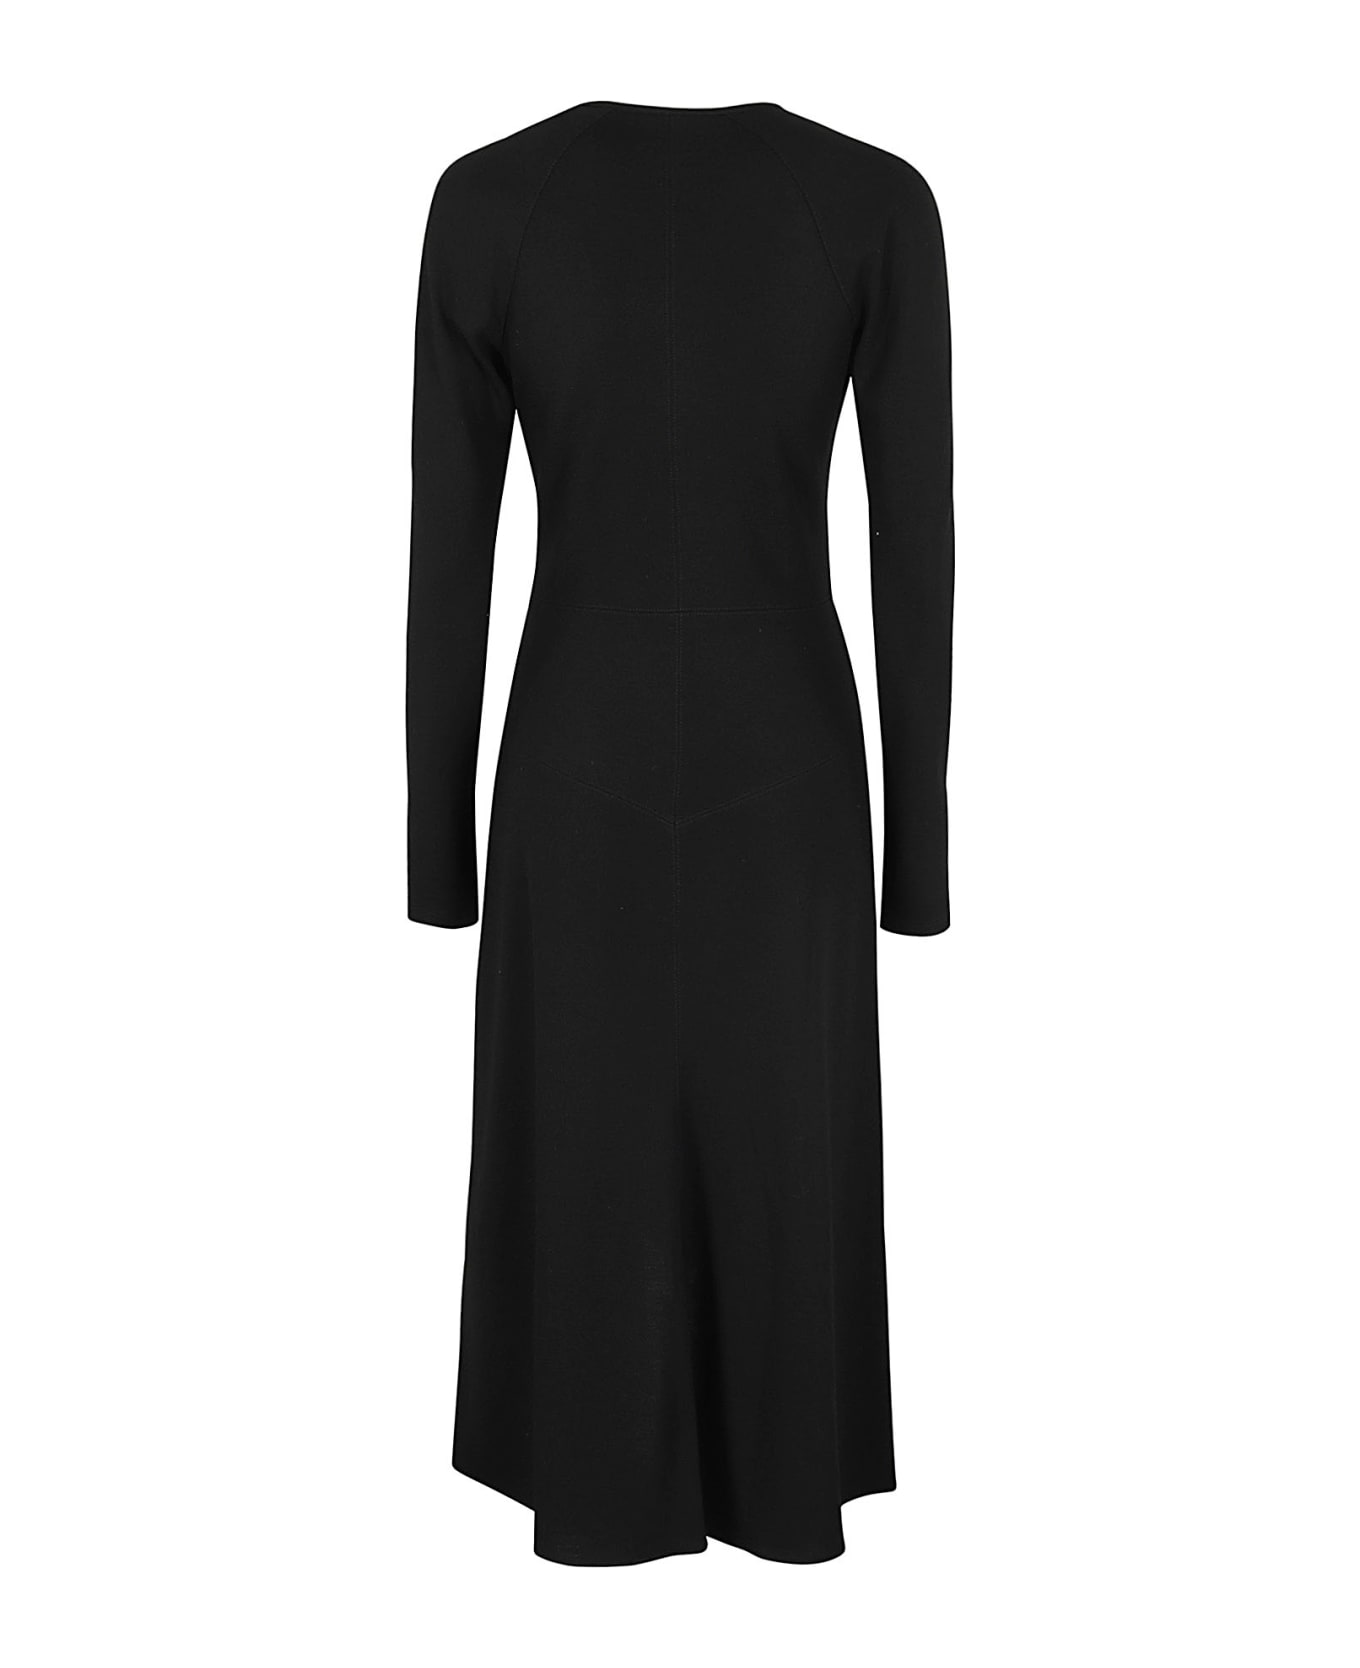 Isabel Marant Dorya Dress - Bk Black